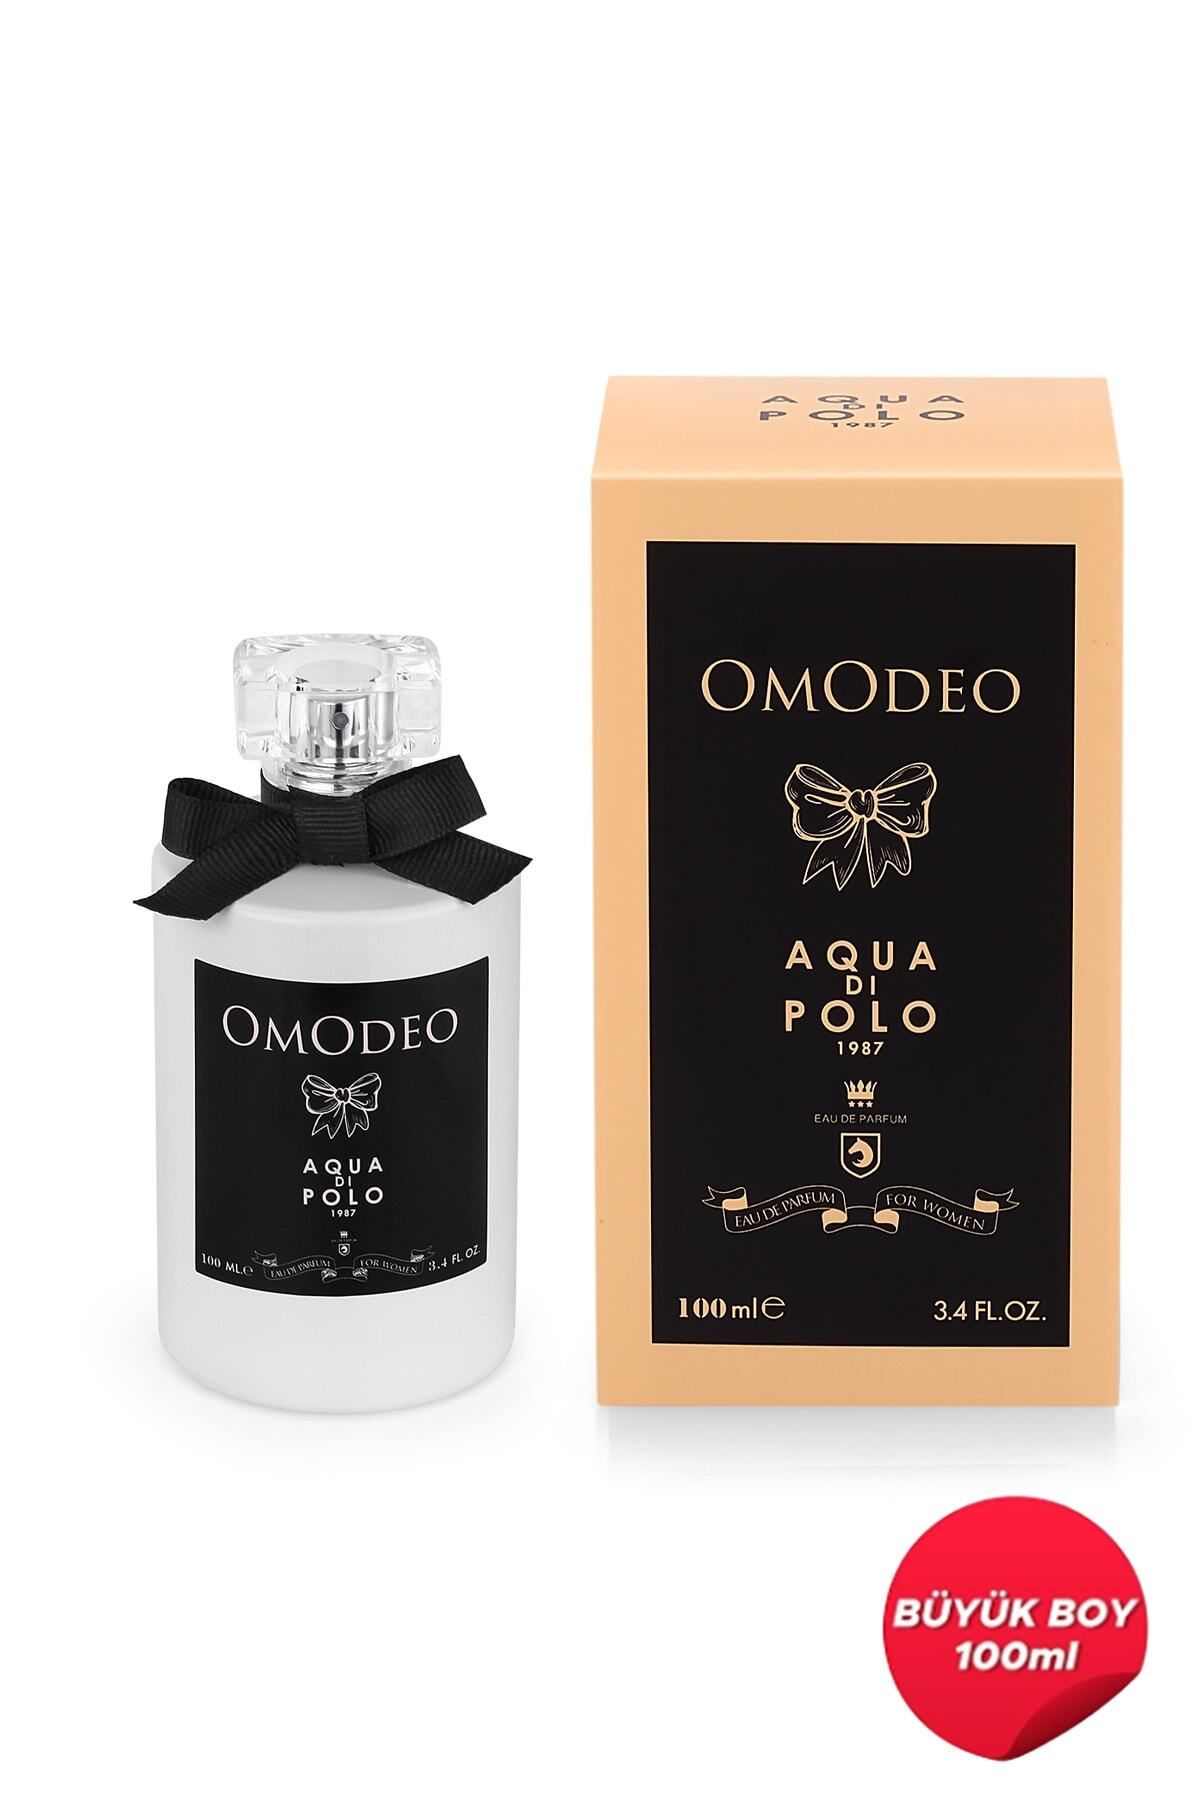 Aqua Di Polo 1987 Omodeo Edp 100 Ml Kadın Parfüm Apcn001101